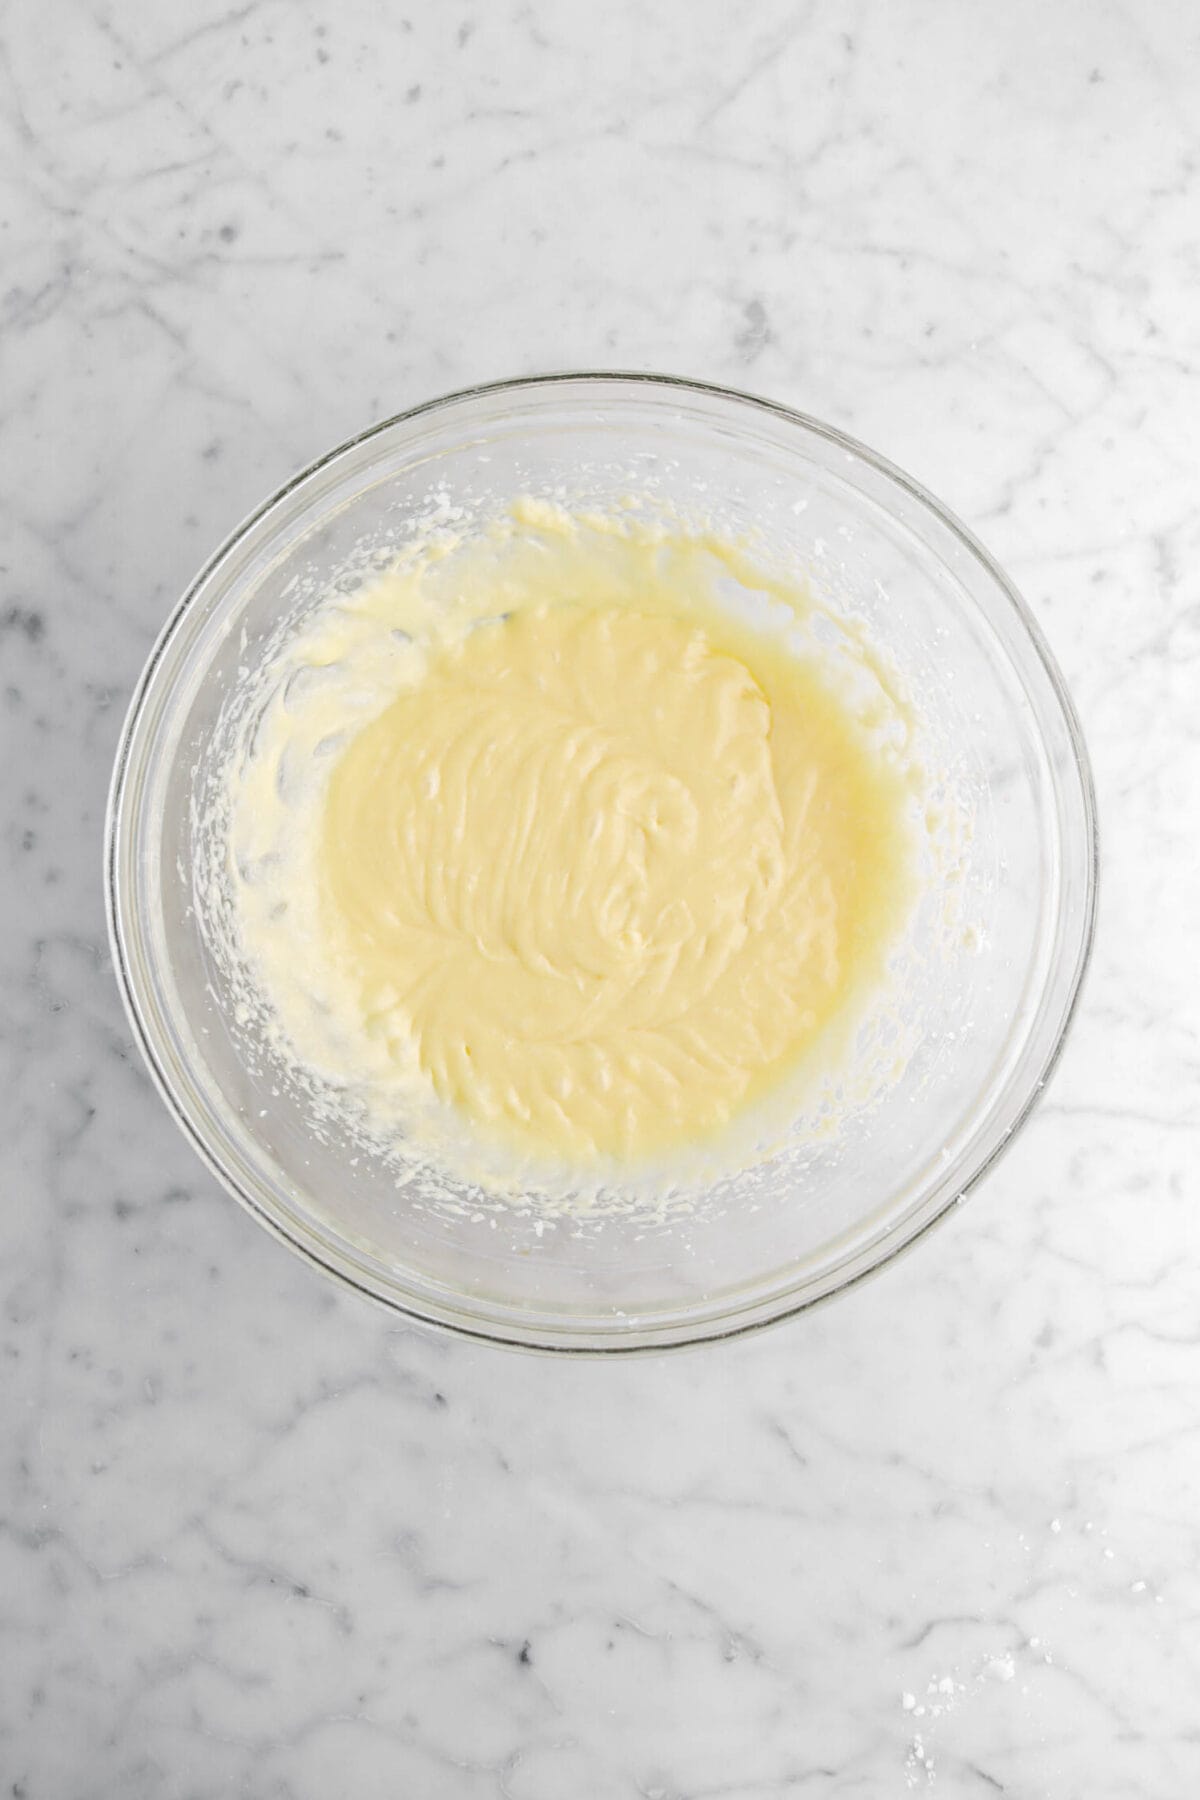 vanilla stirred into egg mixture.